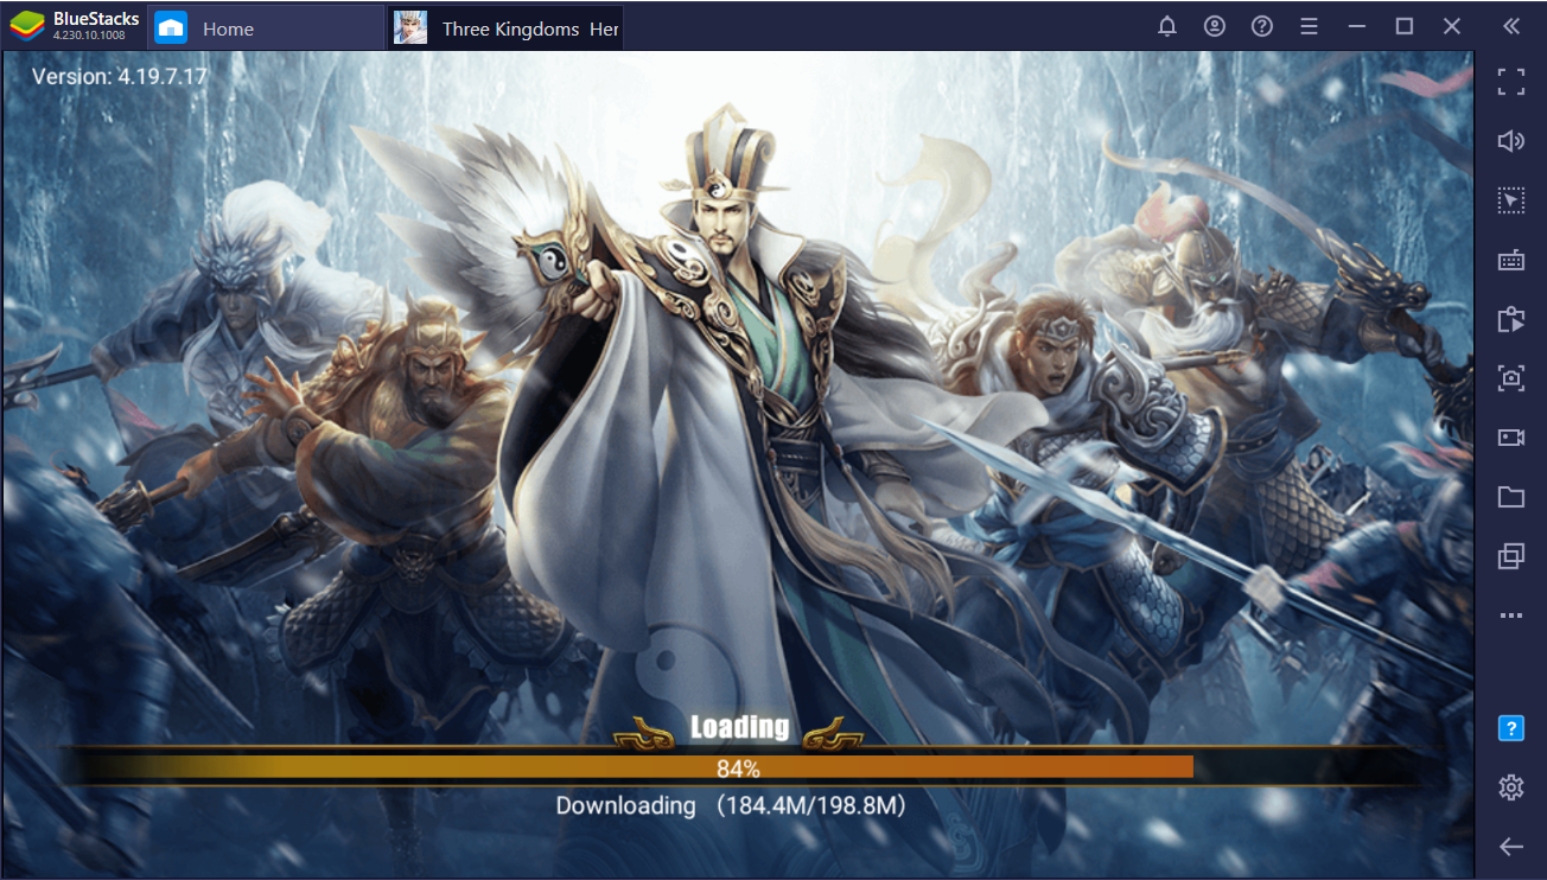 How To Play Three Kingdoms: Heroes Saga On PC With BlueStacks